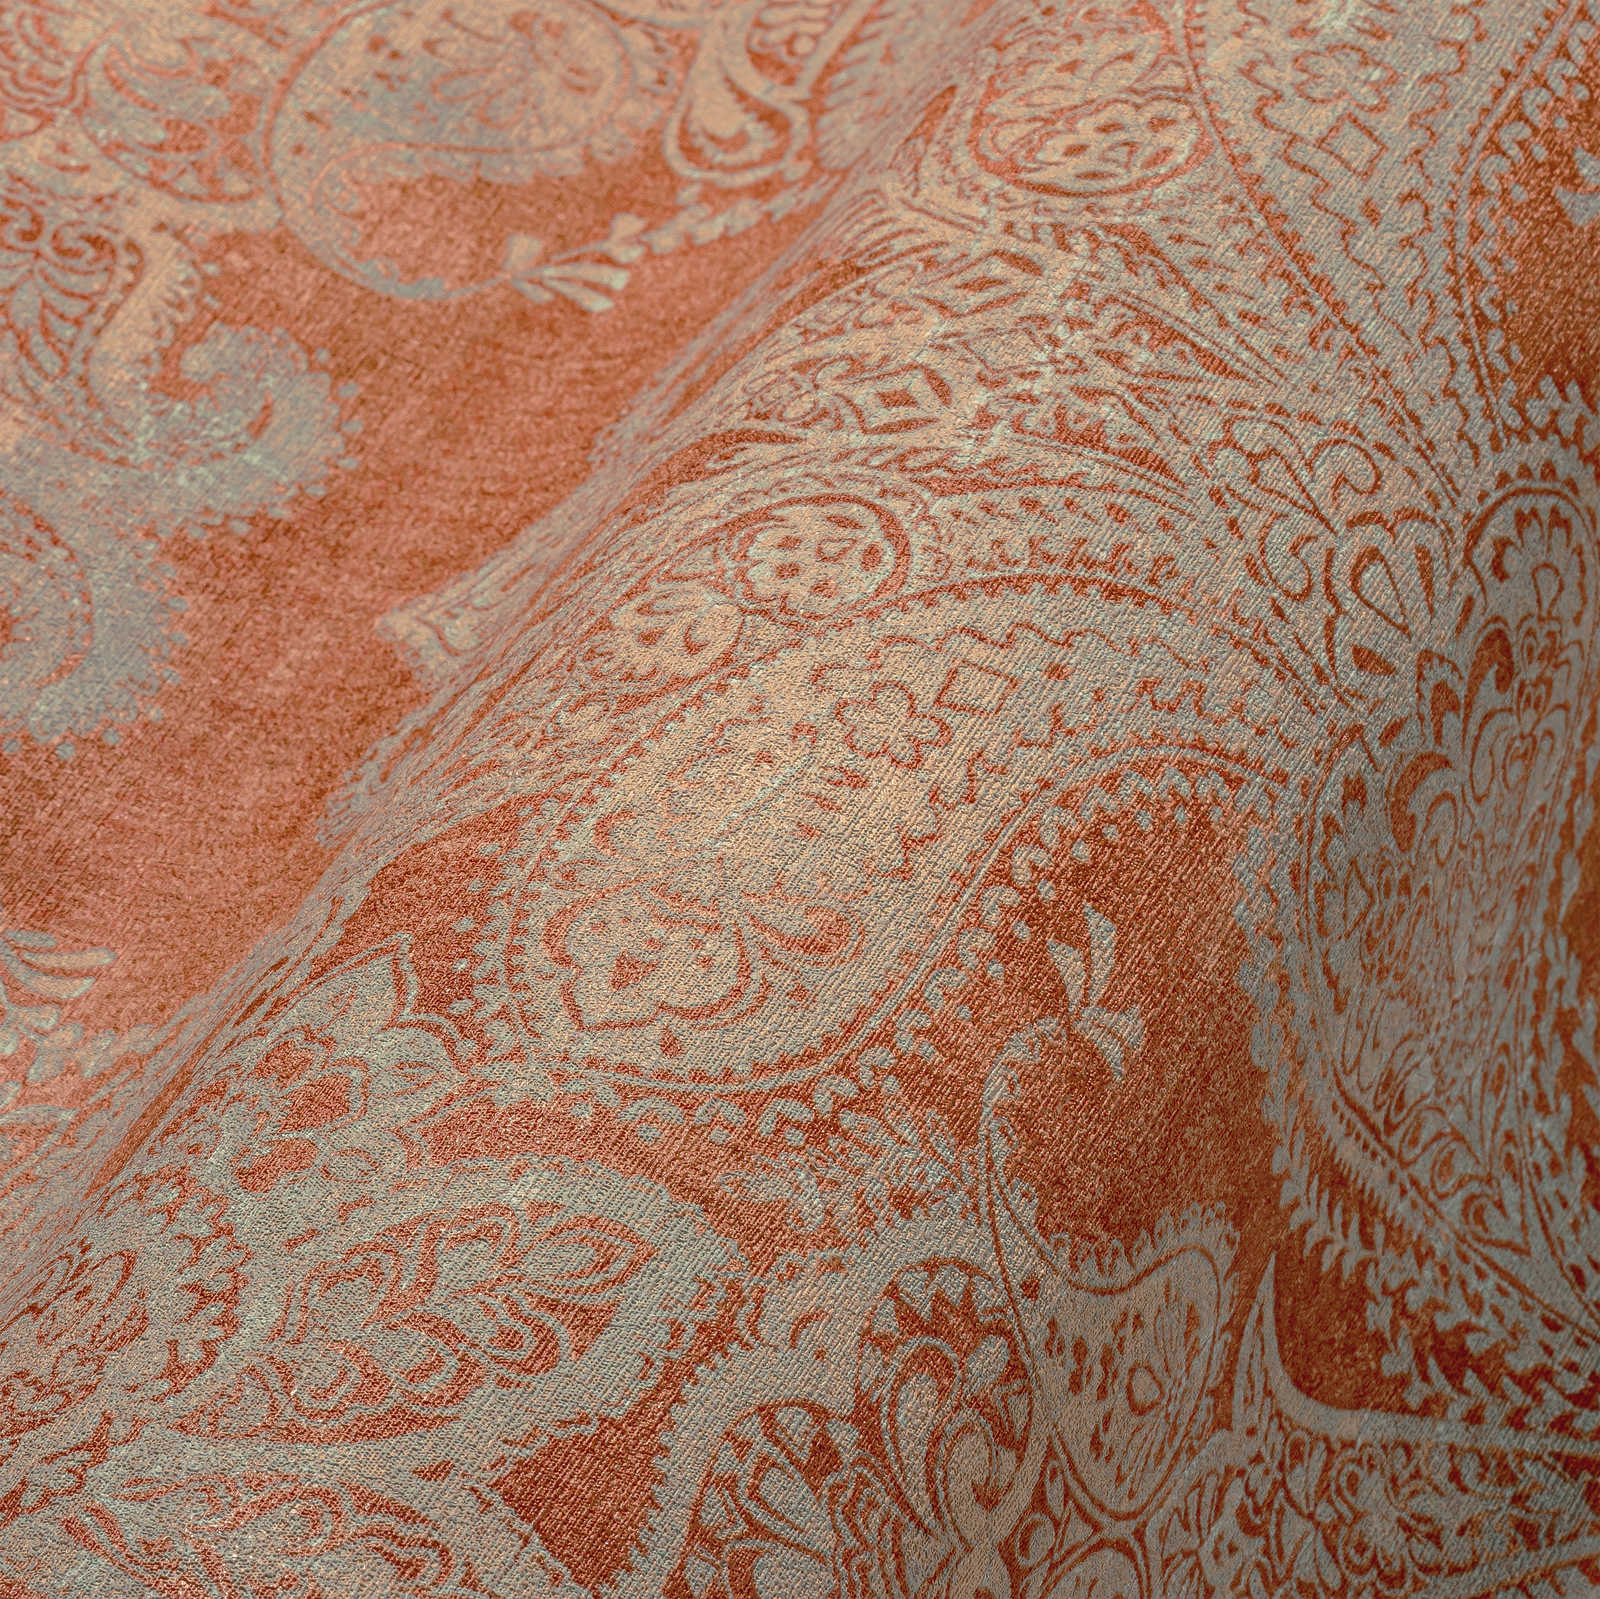             Vliestapete im Barockstil mit Ornamenten – Orange, Türkis, Grau
        